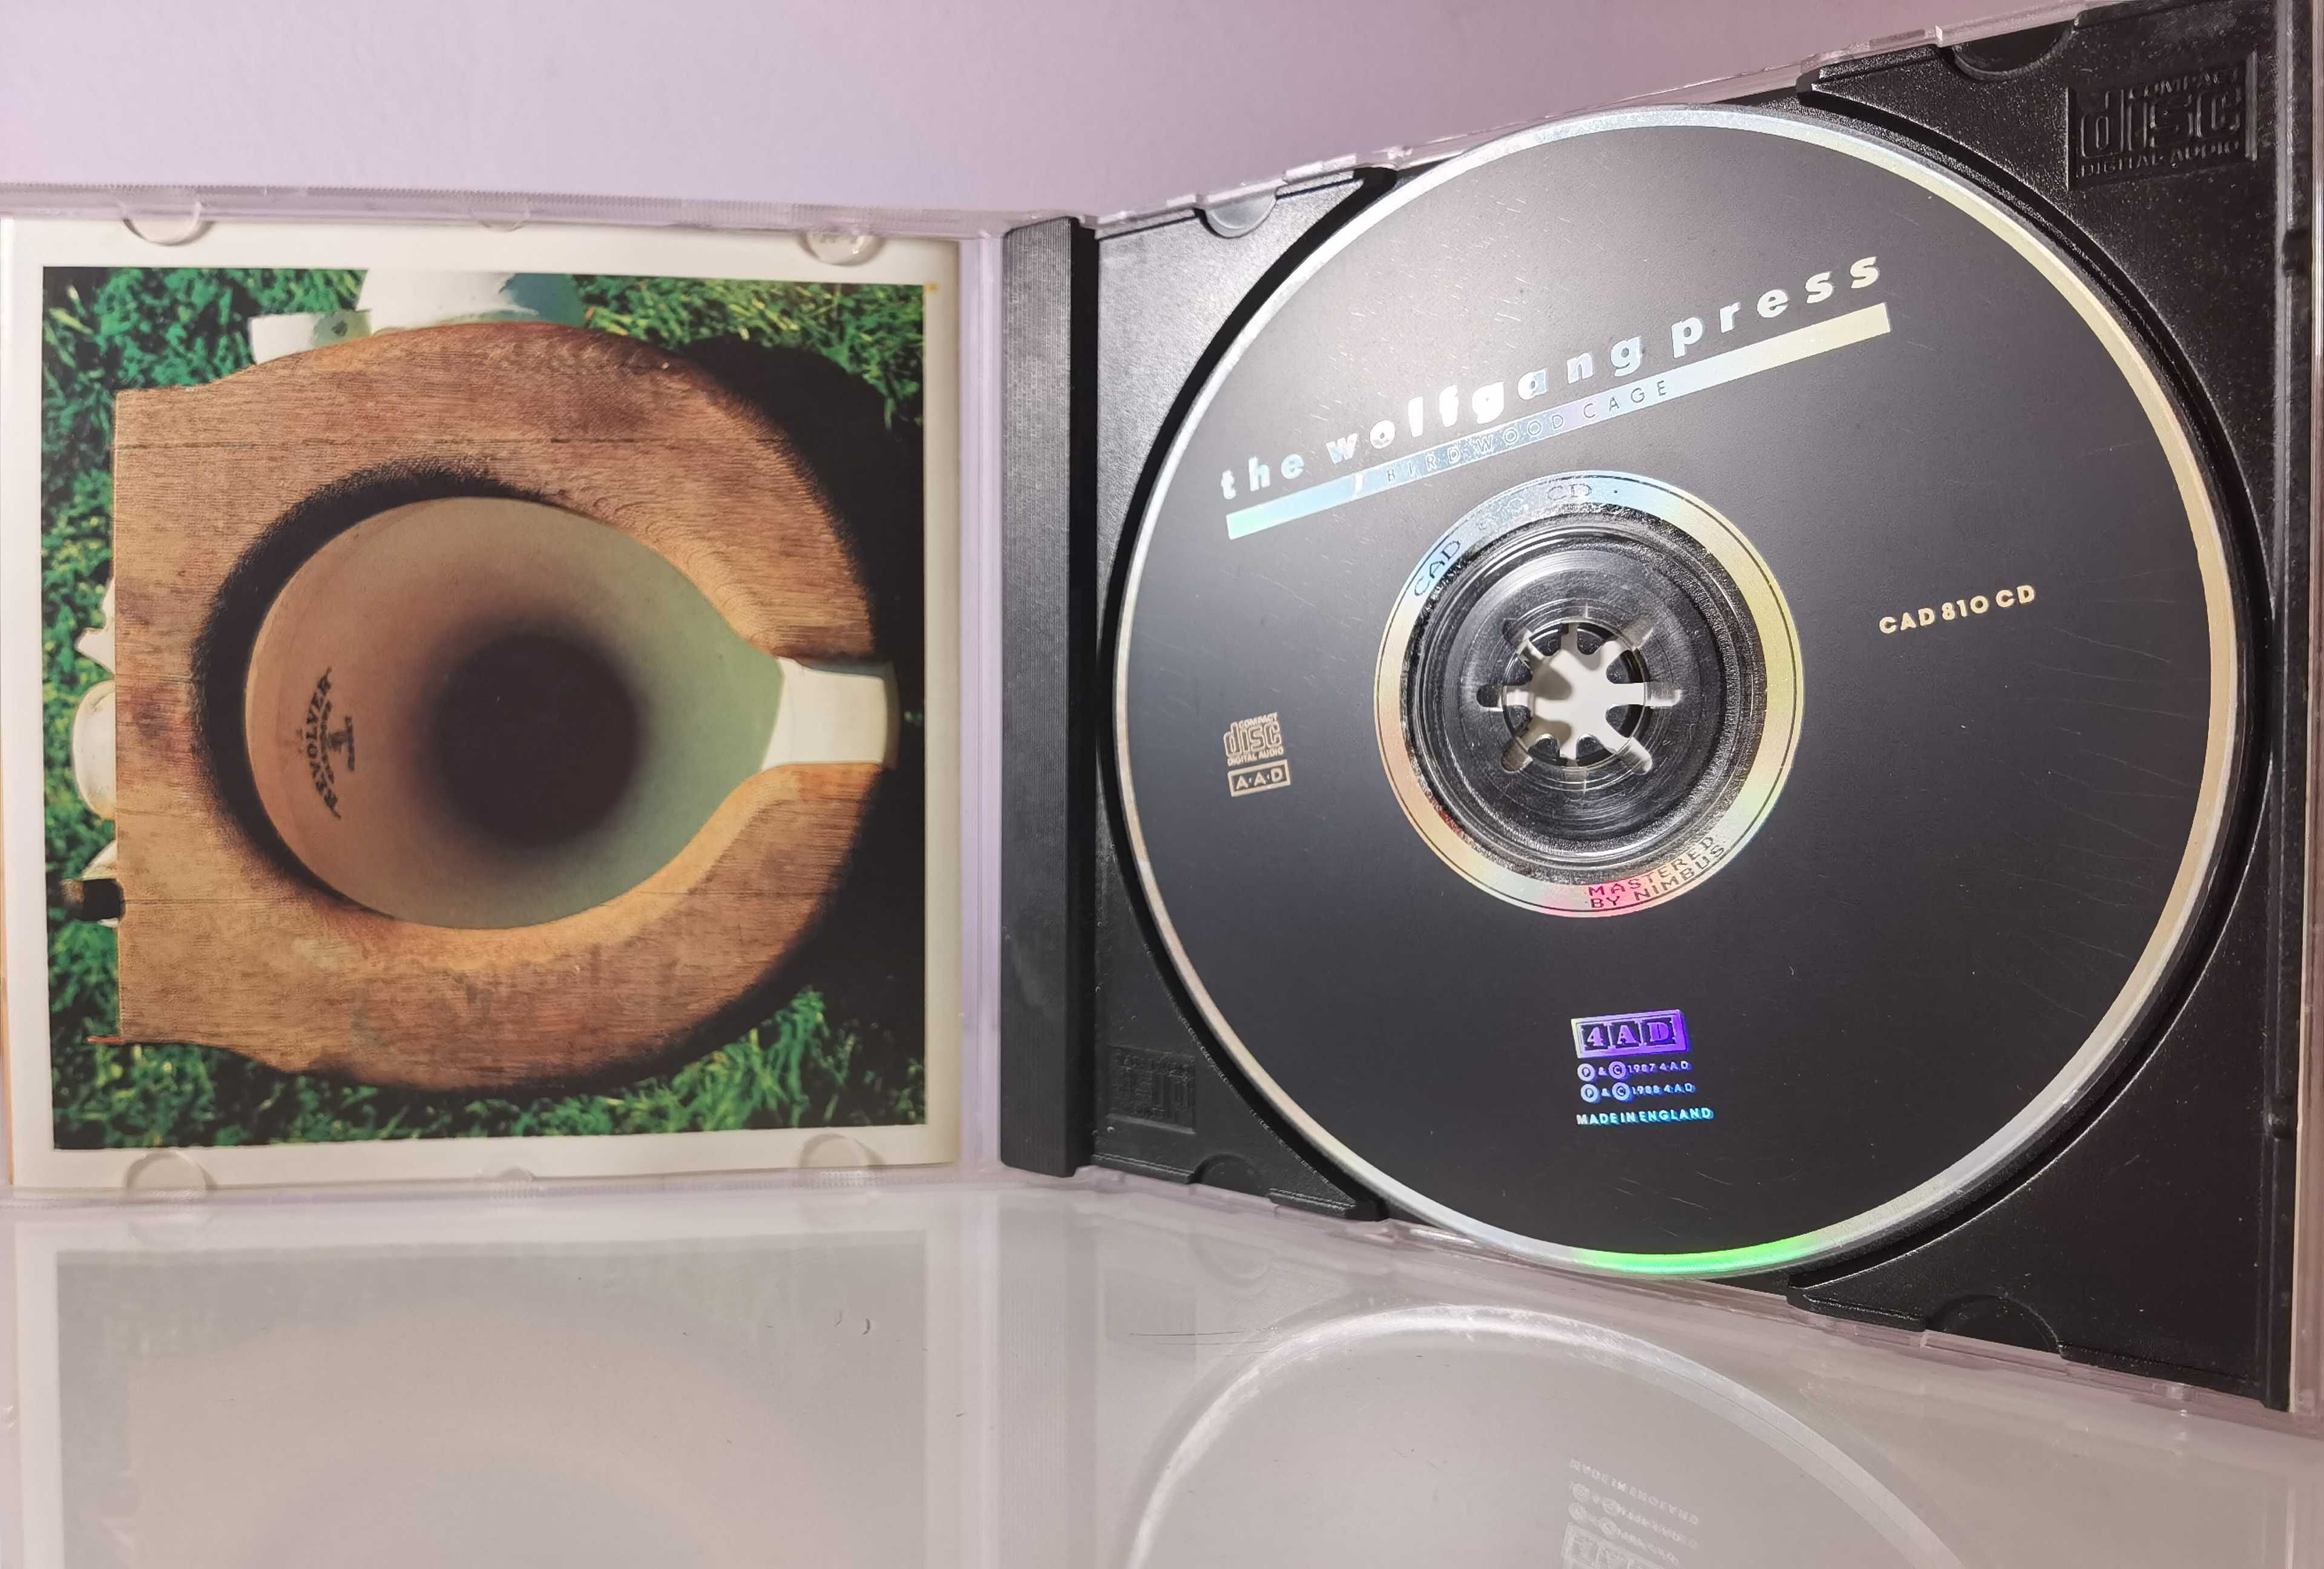 Płyta CD The Wolfgang Press - Bird Wood Cage 4AD